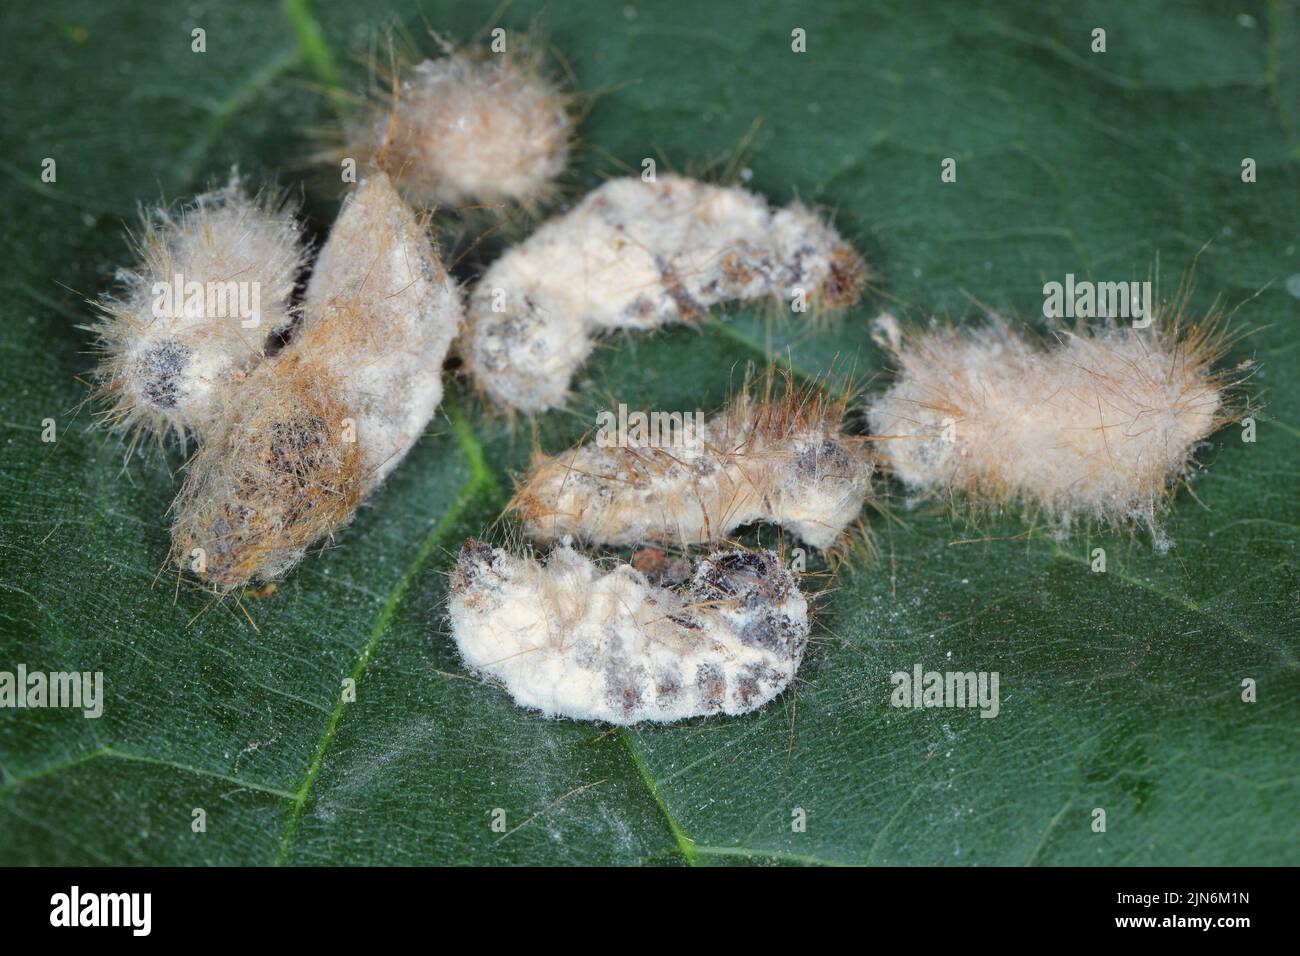 Caterpillars of Brown tail moth Euproctis chrysorrhoea killed by entomopathogenic fungus Beauveria bassiana. Stock Photo